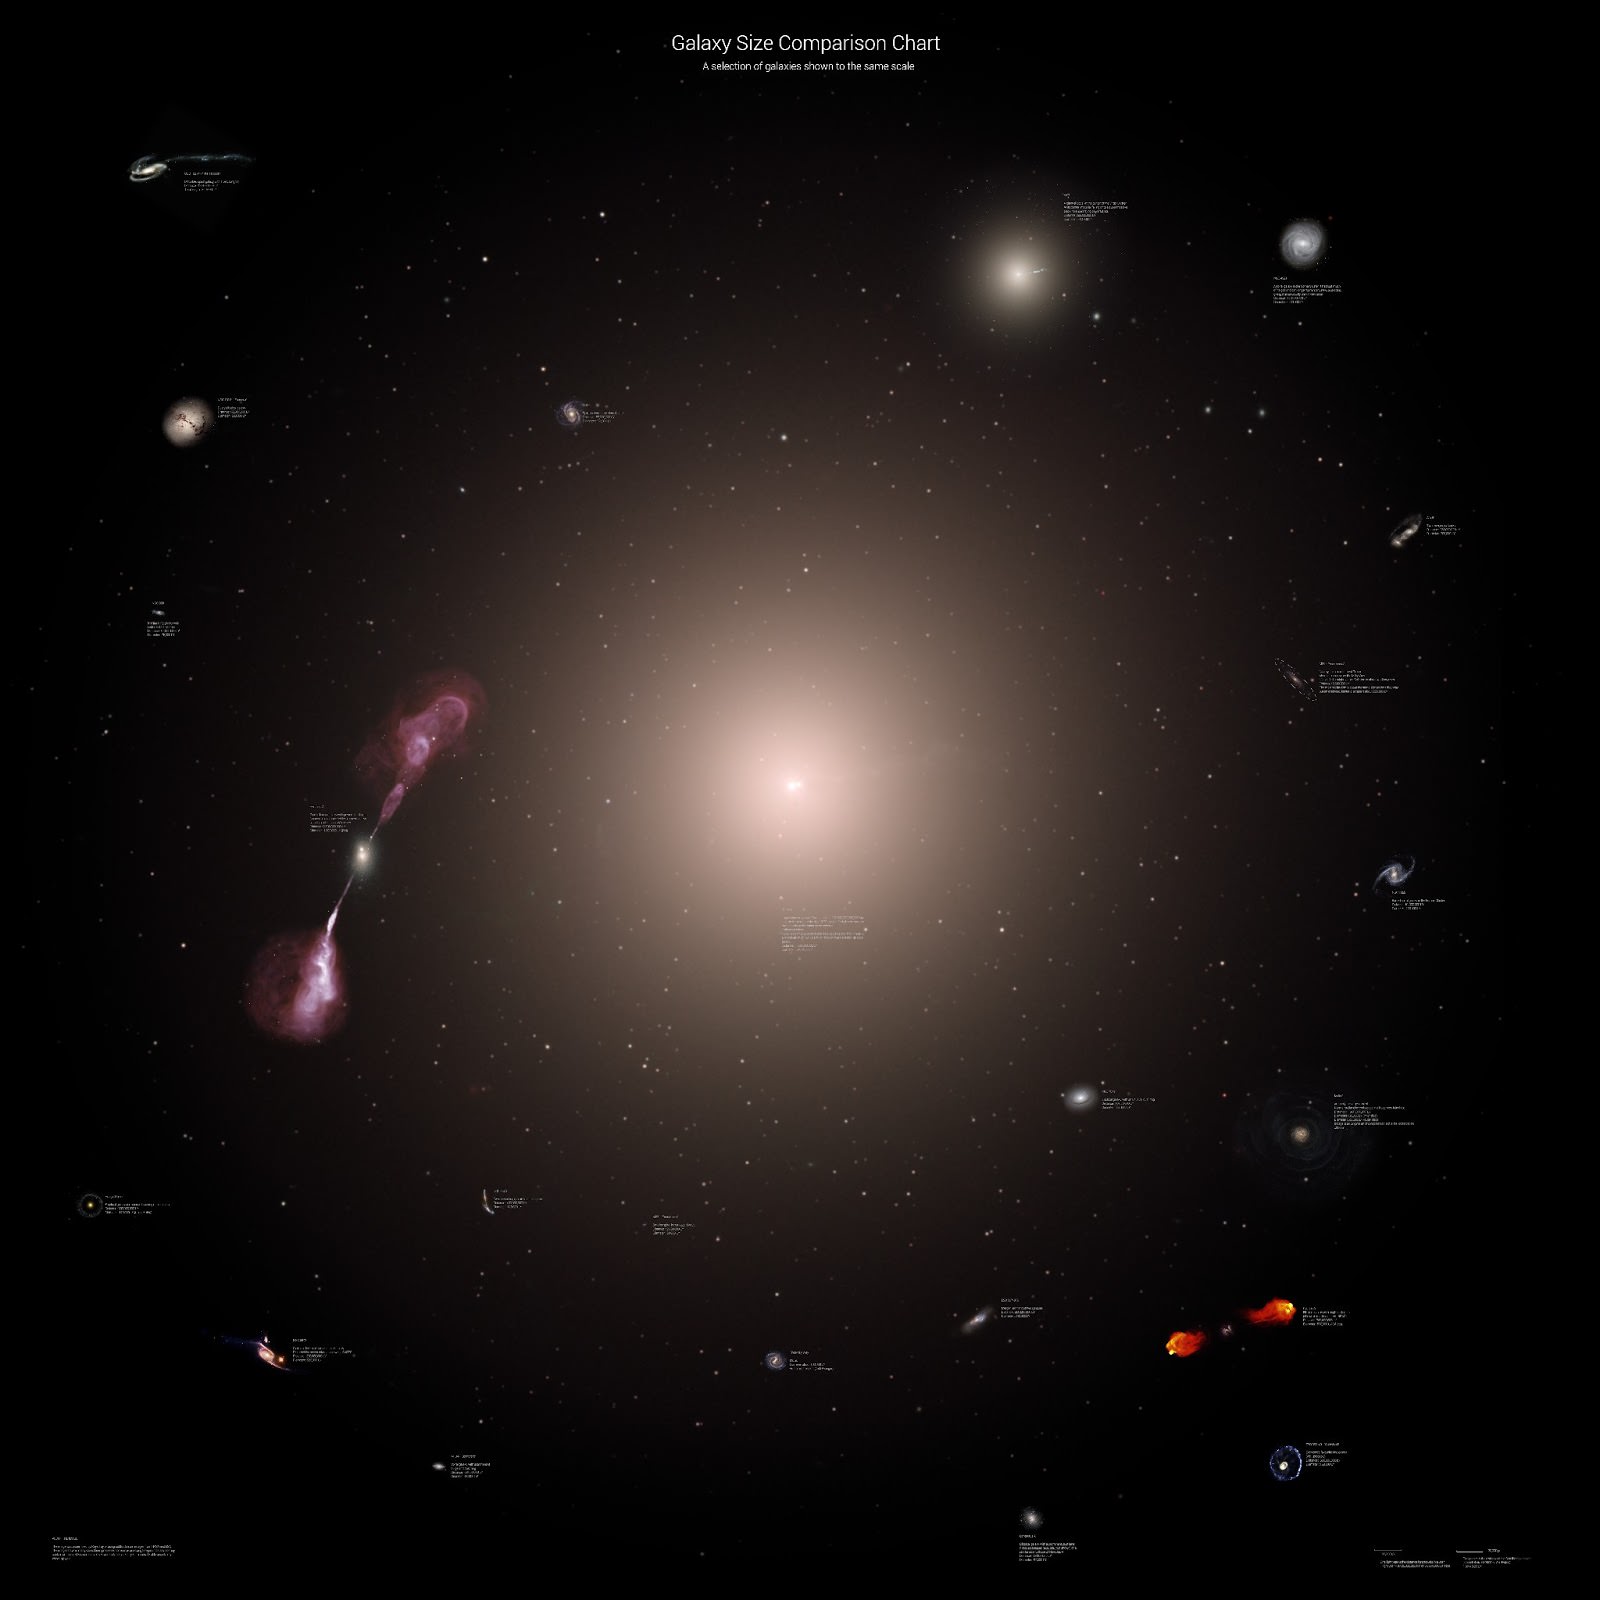 https://www.universetoday.com/wp-content/uploads/2013/04/Galaxy-Size-Comparison-Chart-2.jpg